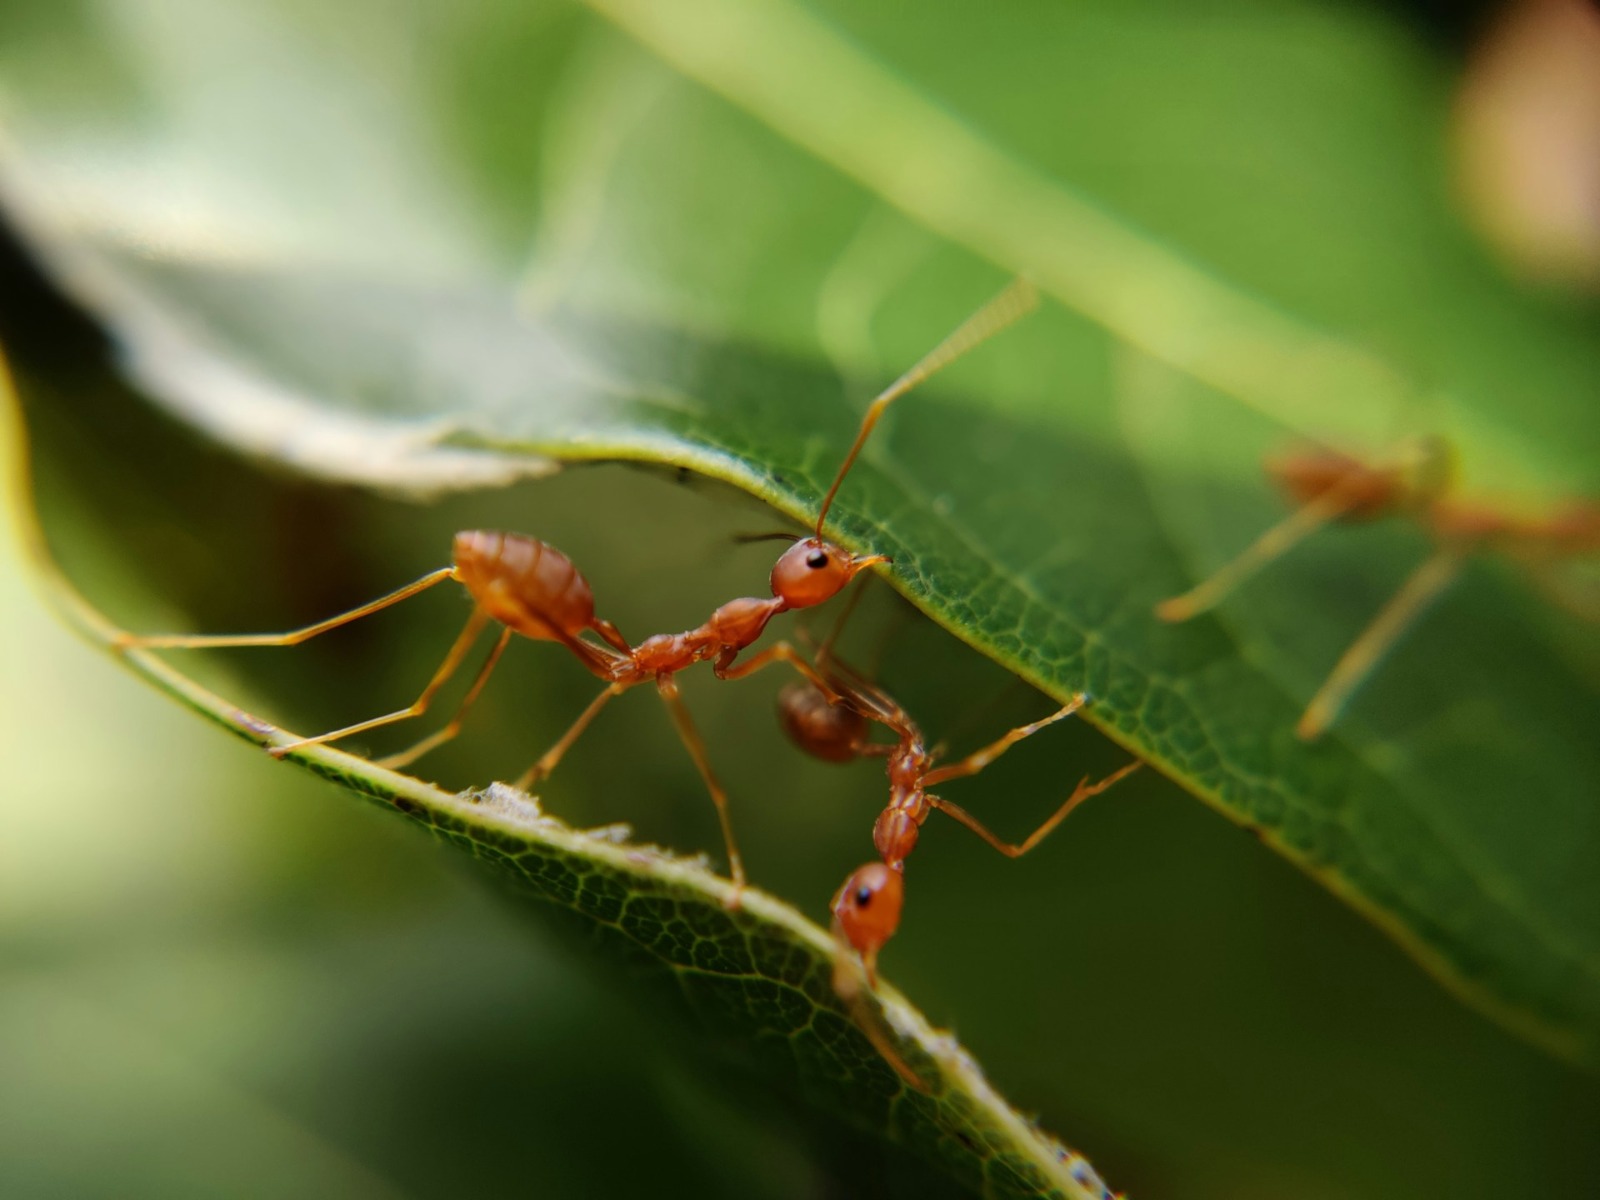 Ajaib! Ini 8 Fakta Menarik Semut yang Luar Biasa